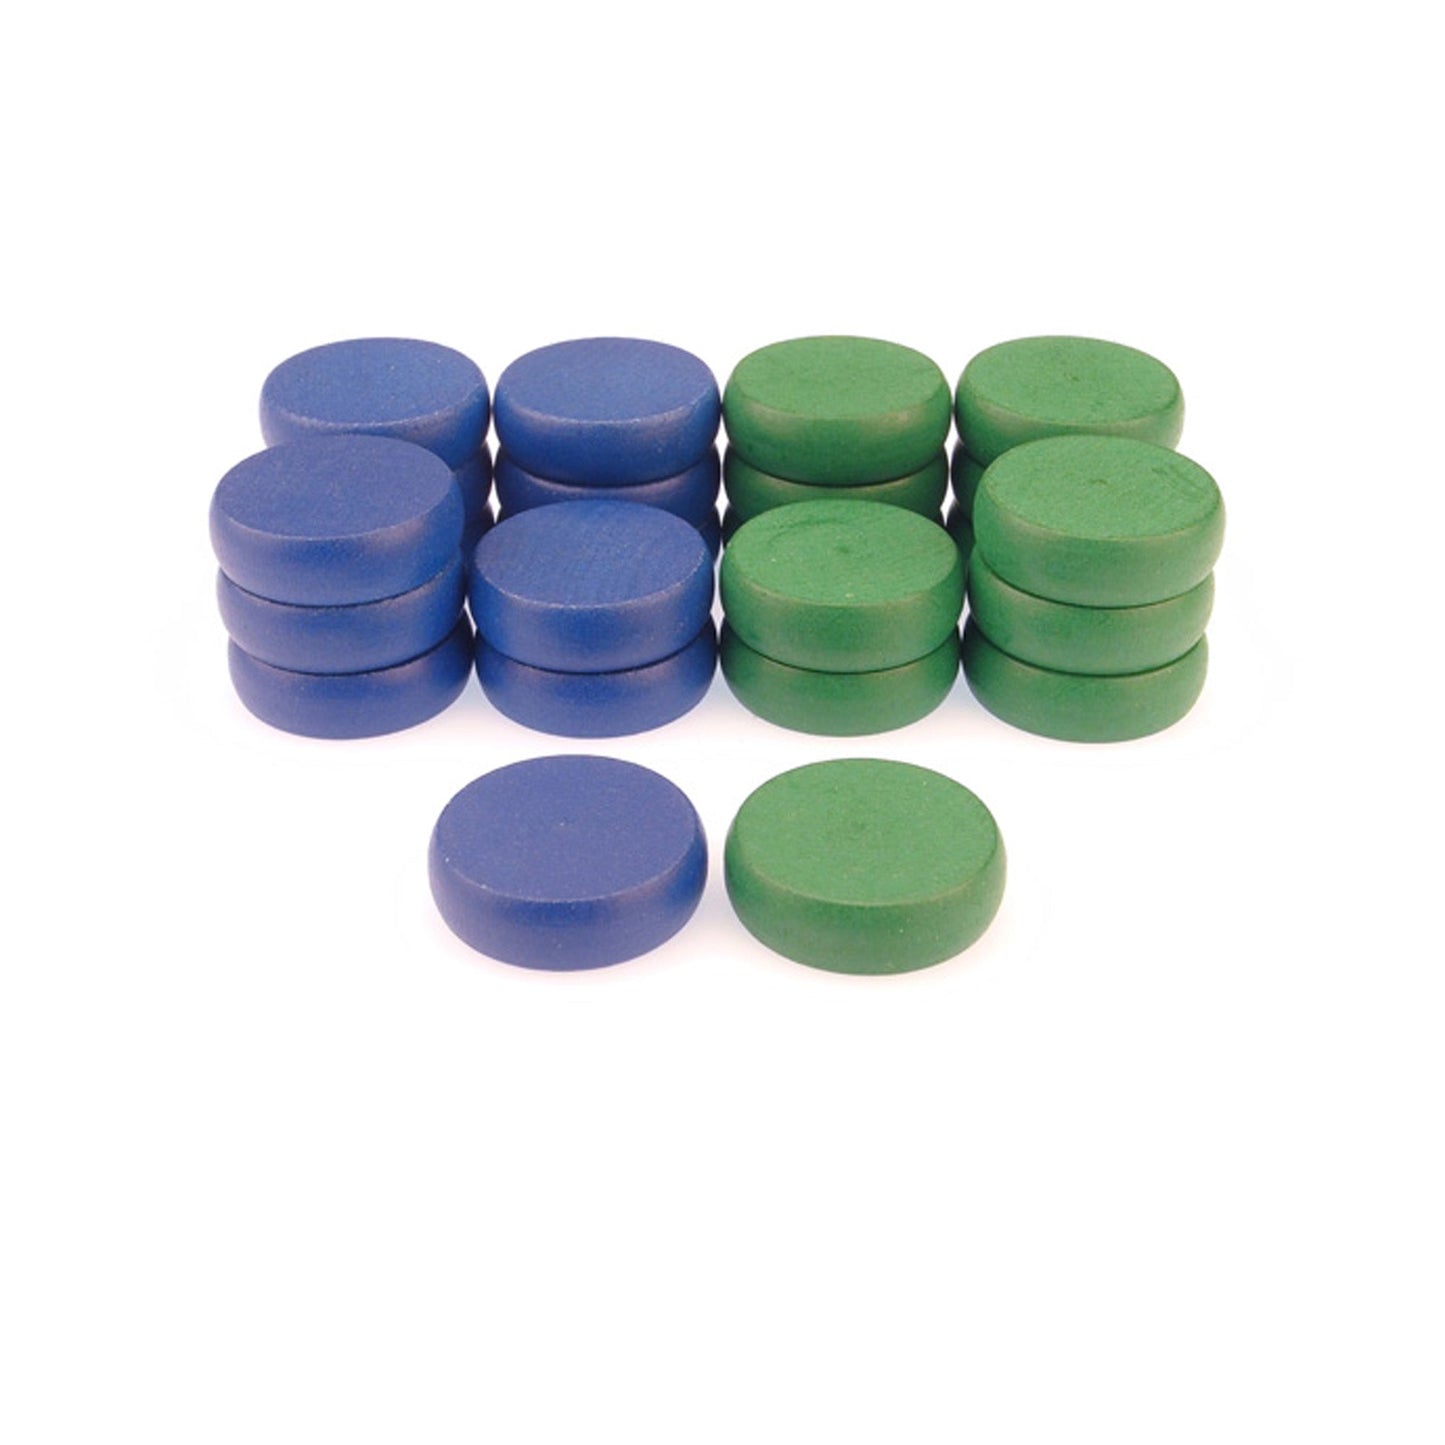 26 Blue & Green Crokinole Tournament Discs + Bag (13 Blue & 13 Green) - Crokinole Europe